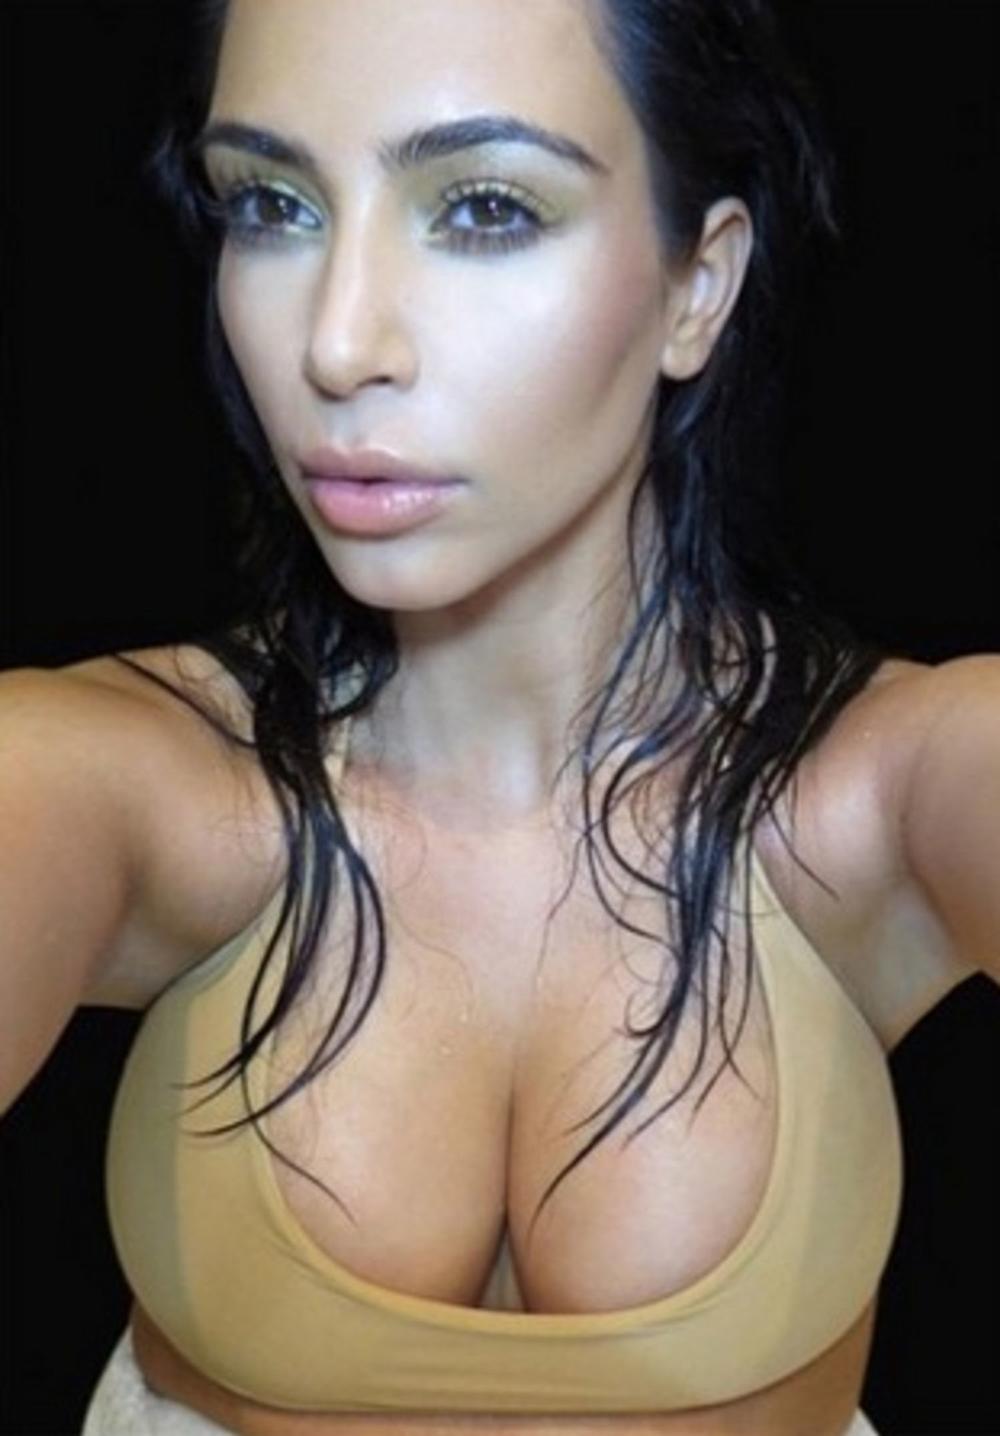 kim-kardashian-west-is-the-outsider-artist-america-deserves-848-body-image-1432750344